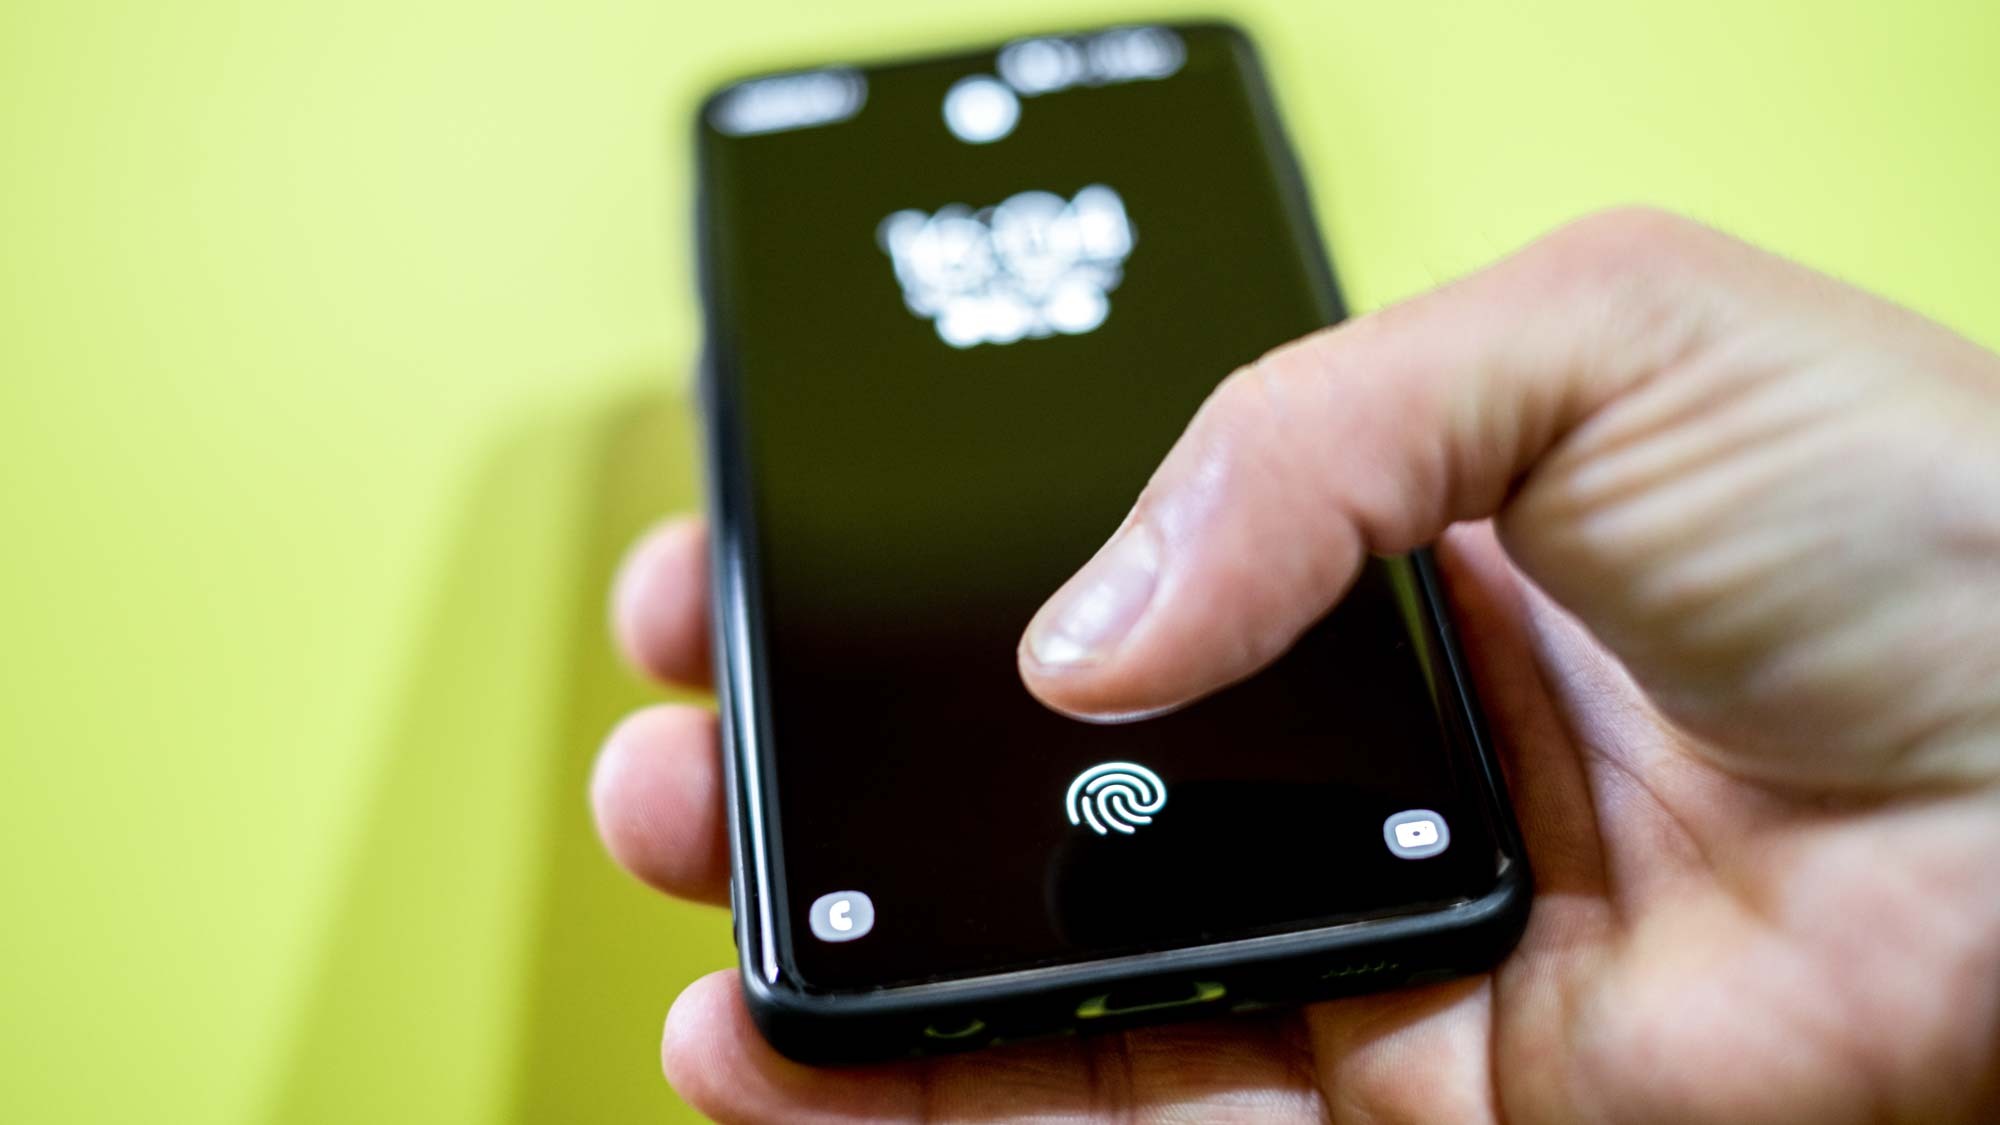 Fingerprint reader on an Android phone.